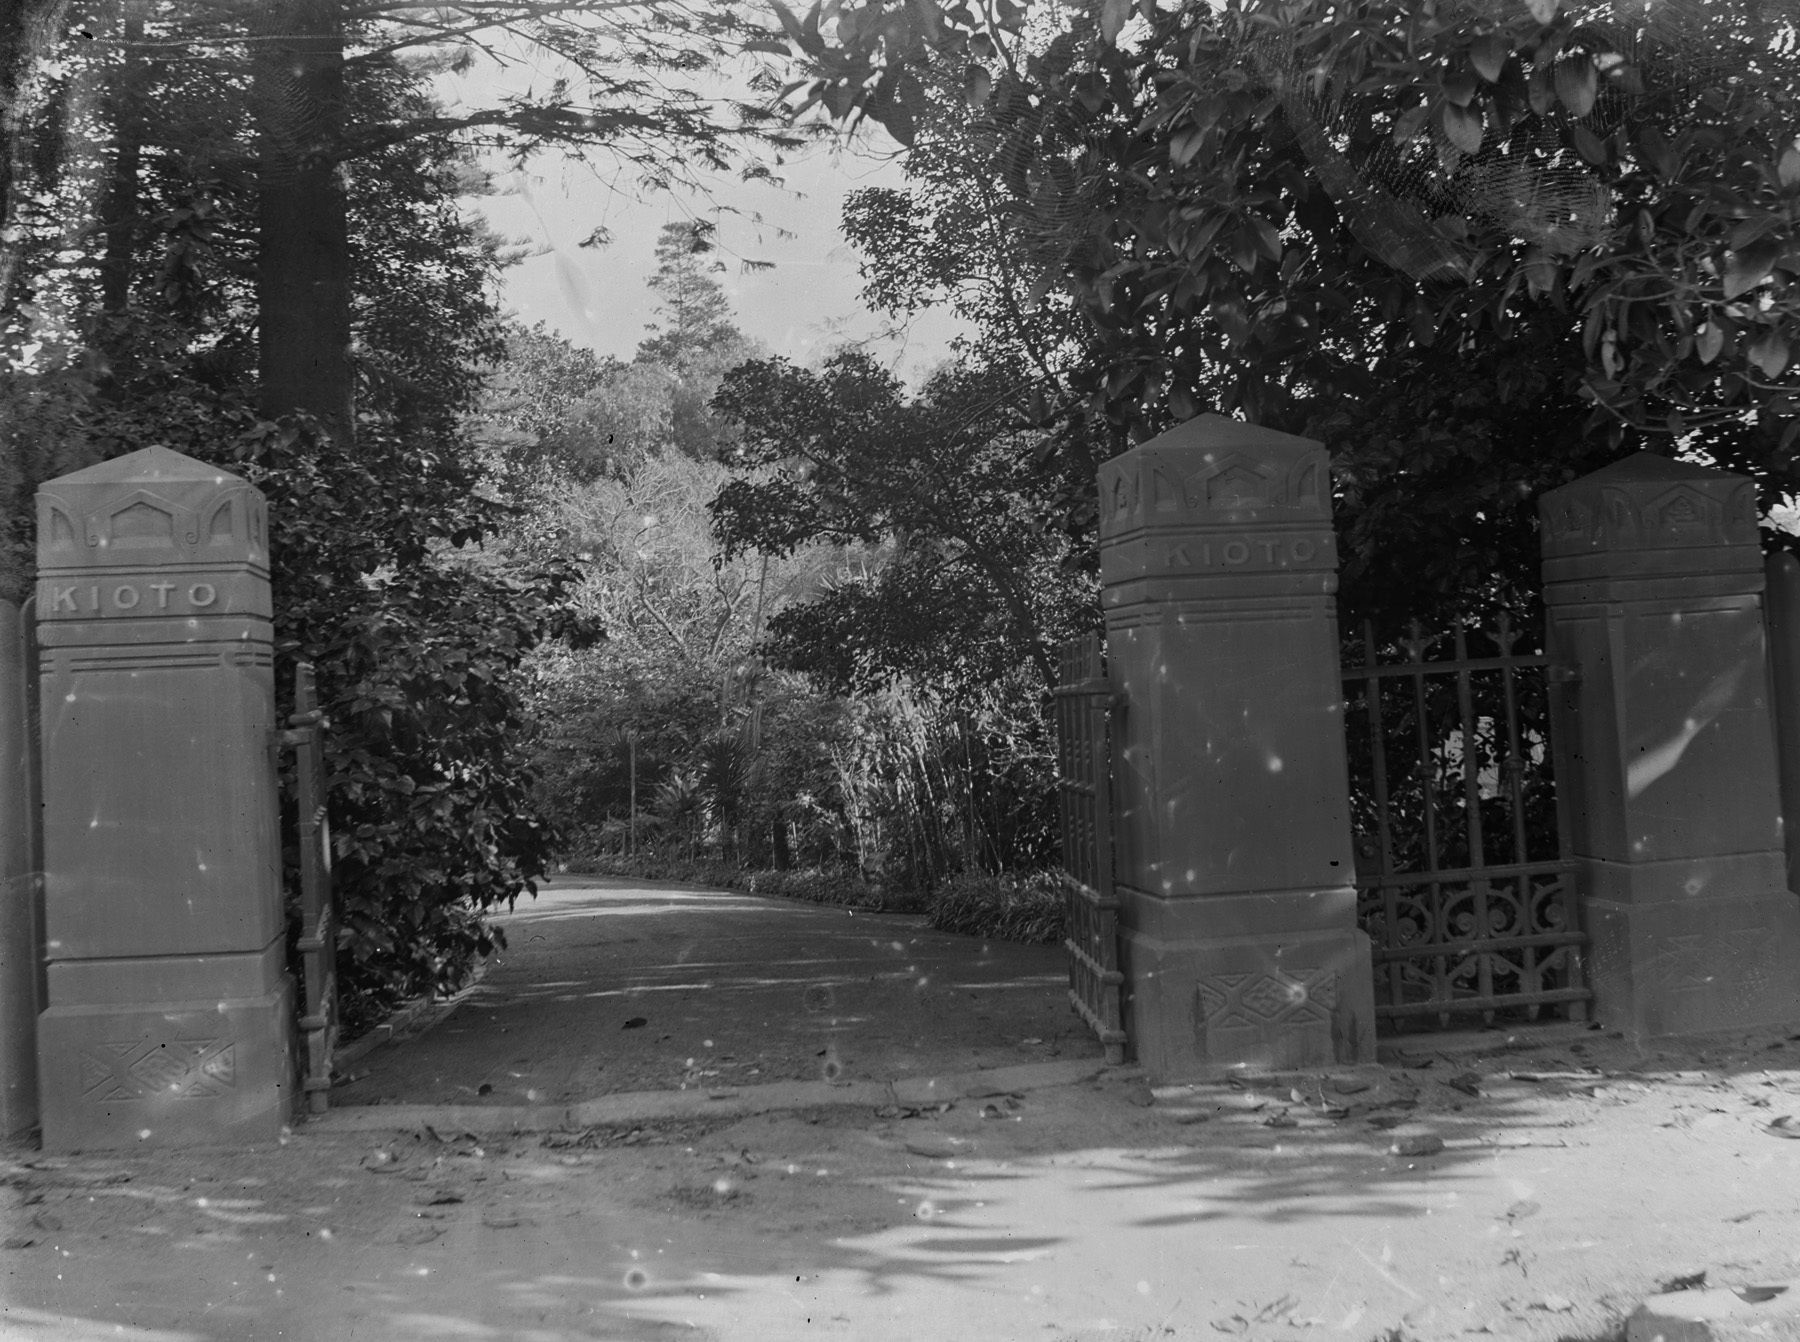 The entrance gates of Kioto, Waverley, around 1912 / Ann Marie Parnell, photographer